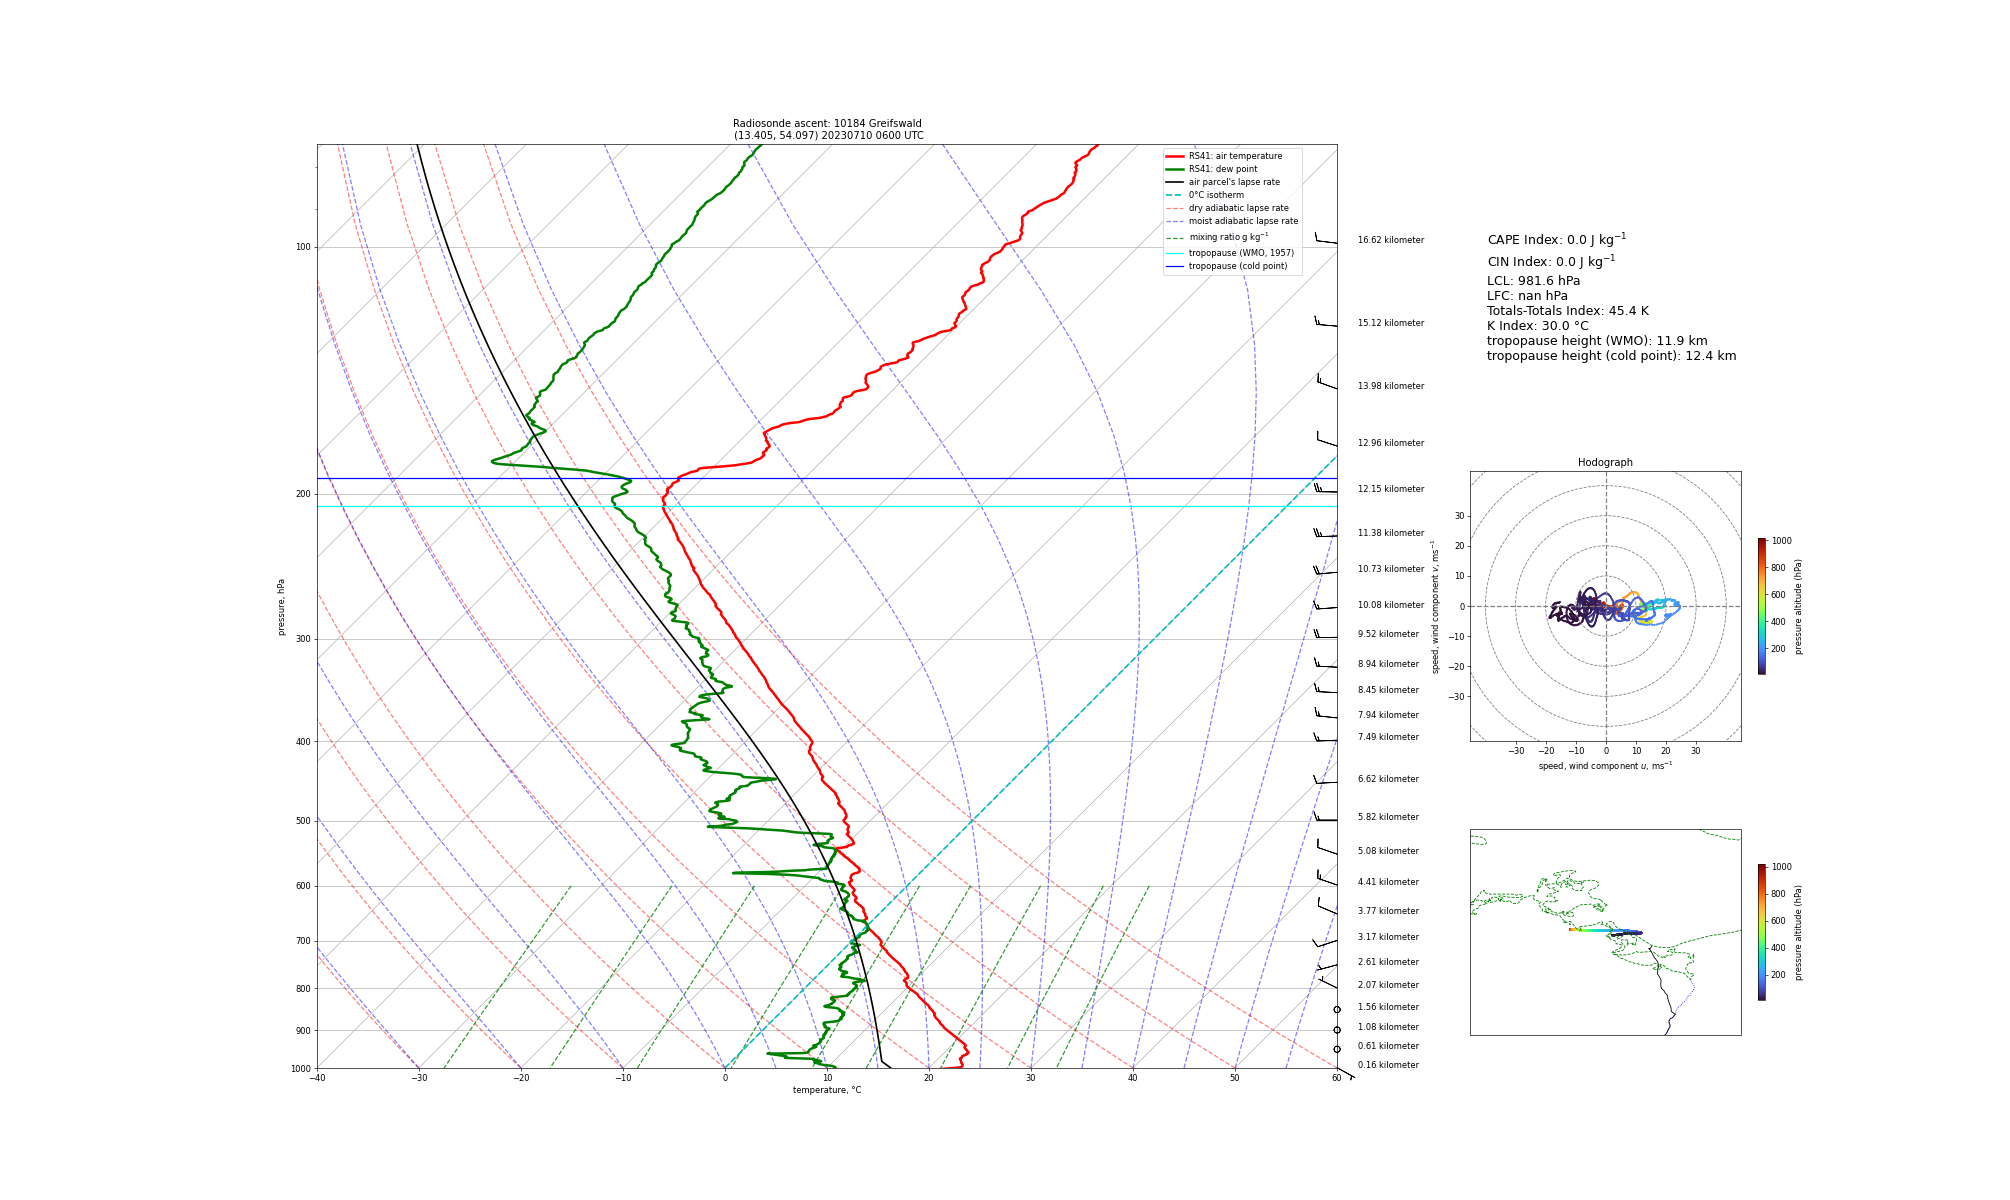 Visualisation of the radiosounding profile at Greifswald at 0600 UTC